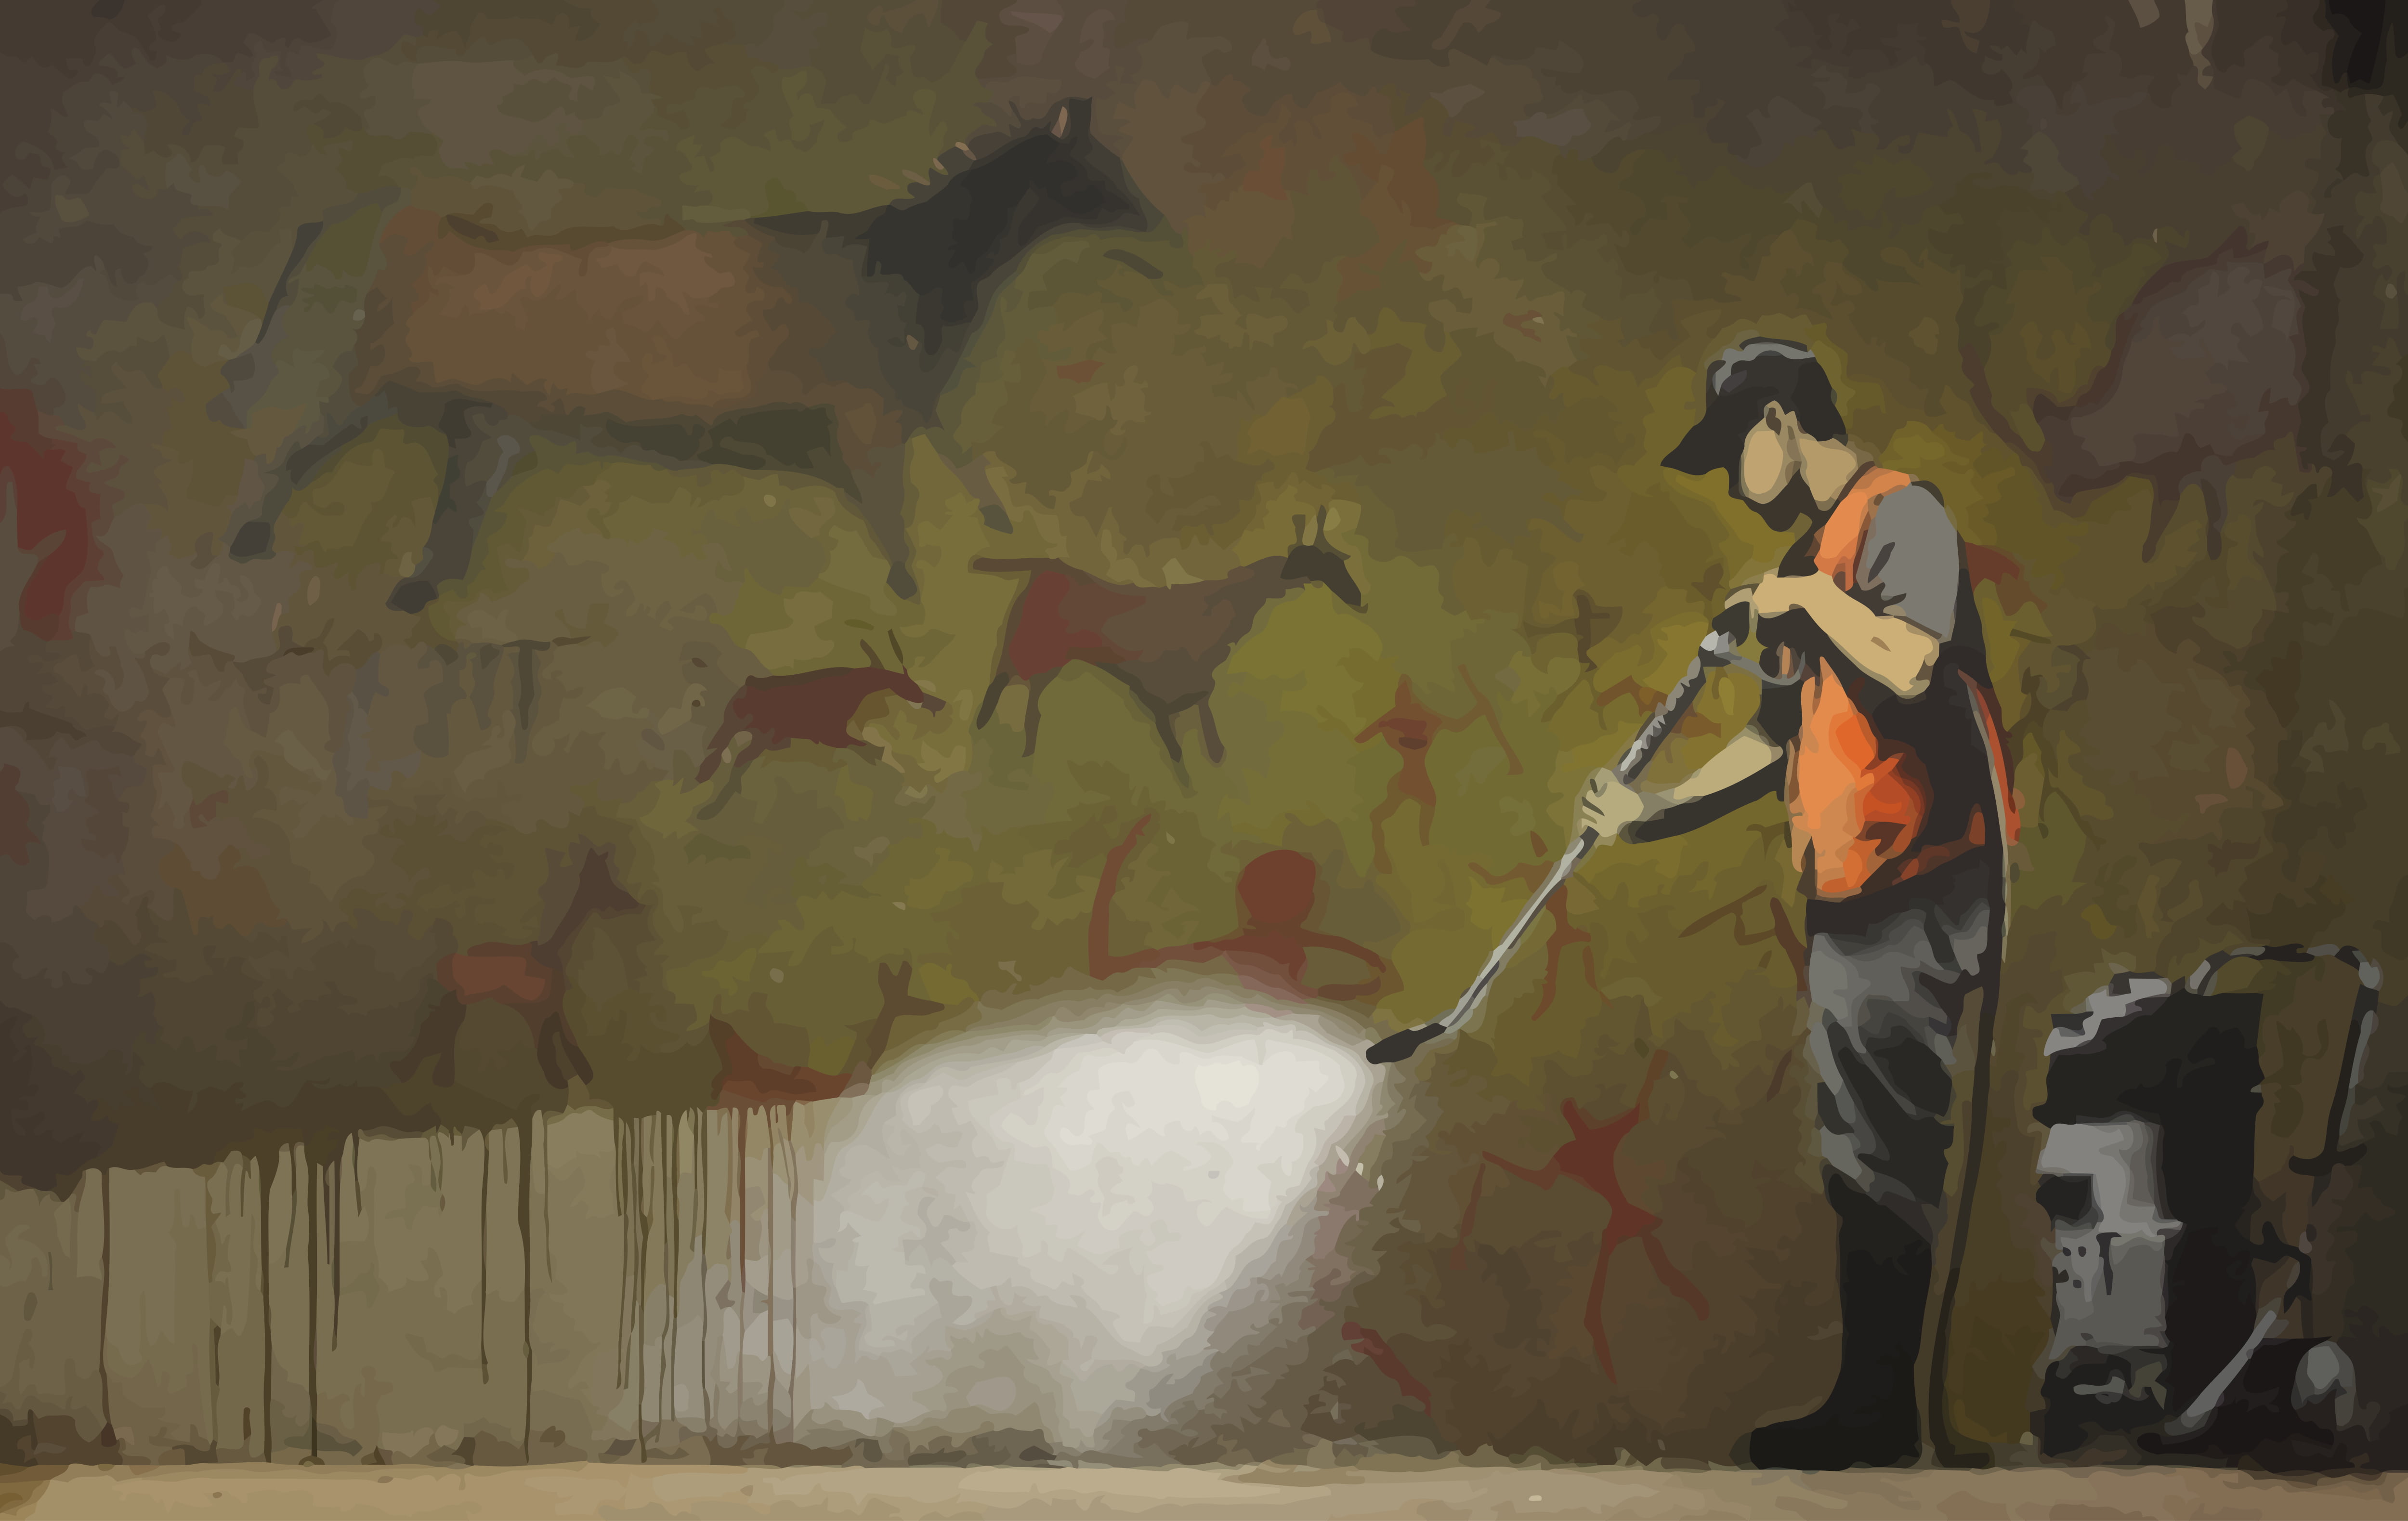 Painting Of Person Holding Pressure Washer Street Art Banksy Graffiti Hd Wallpaper Wallpaper Flare